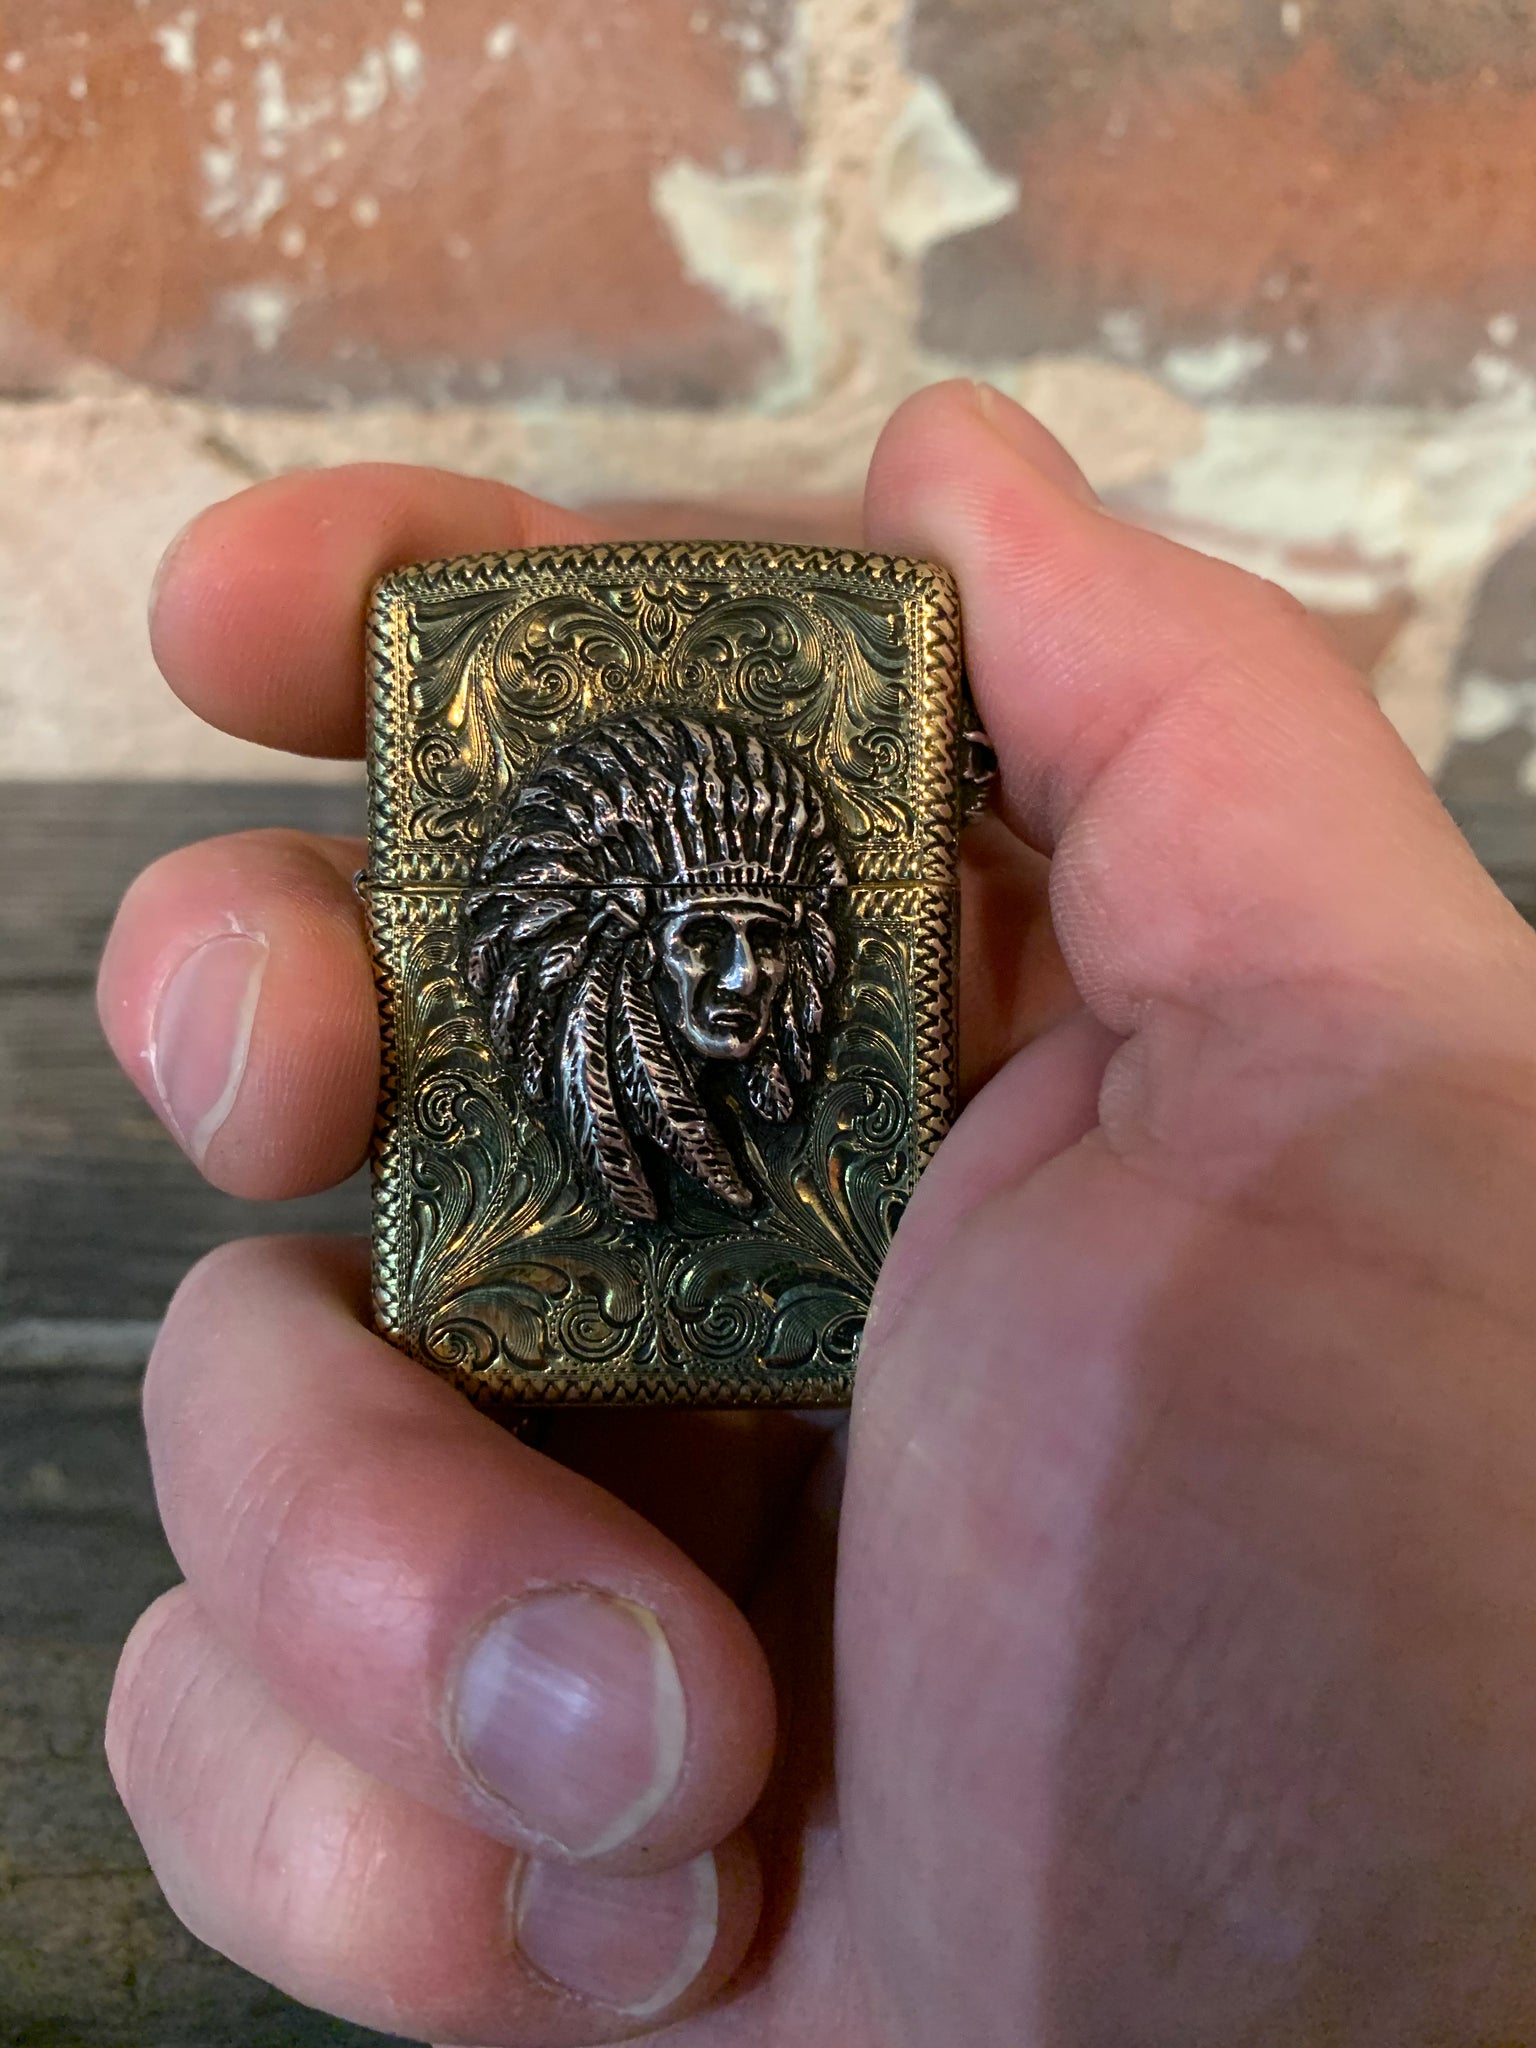 Silver King Brass Engraved Western Zippo Lighter